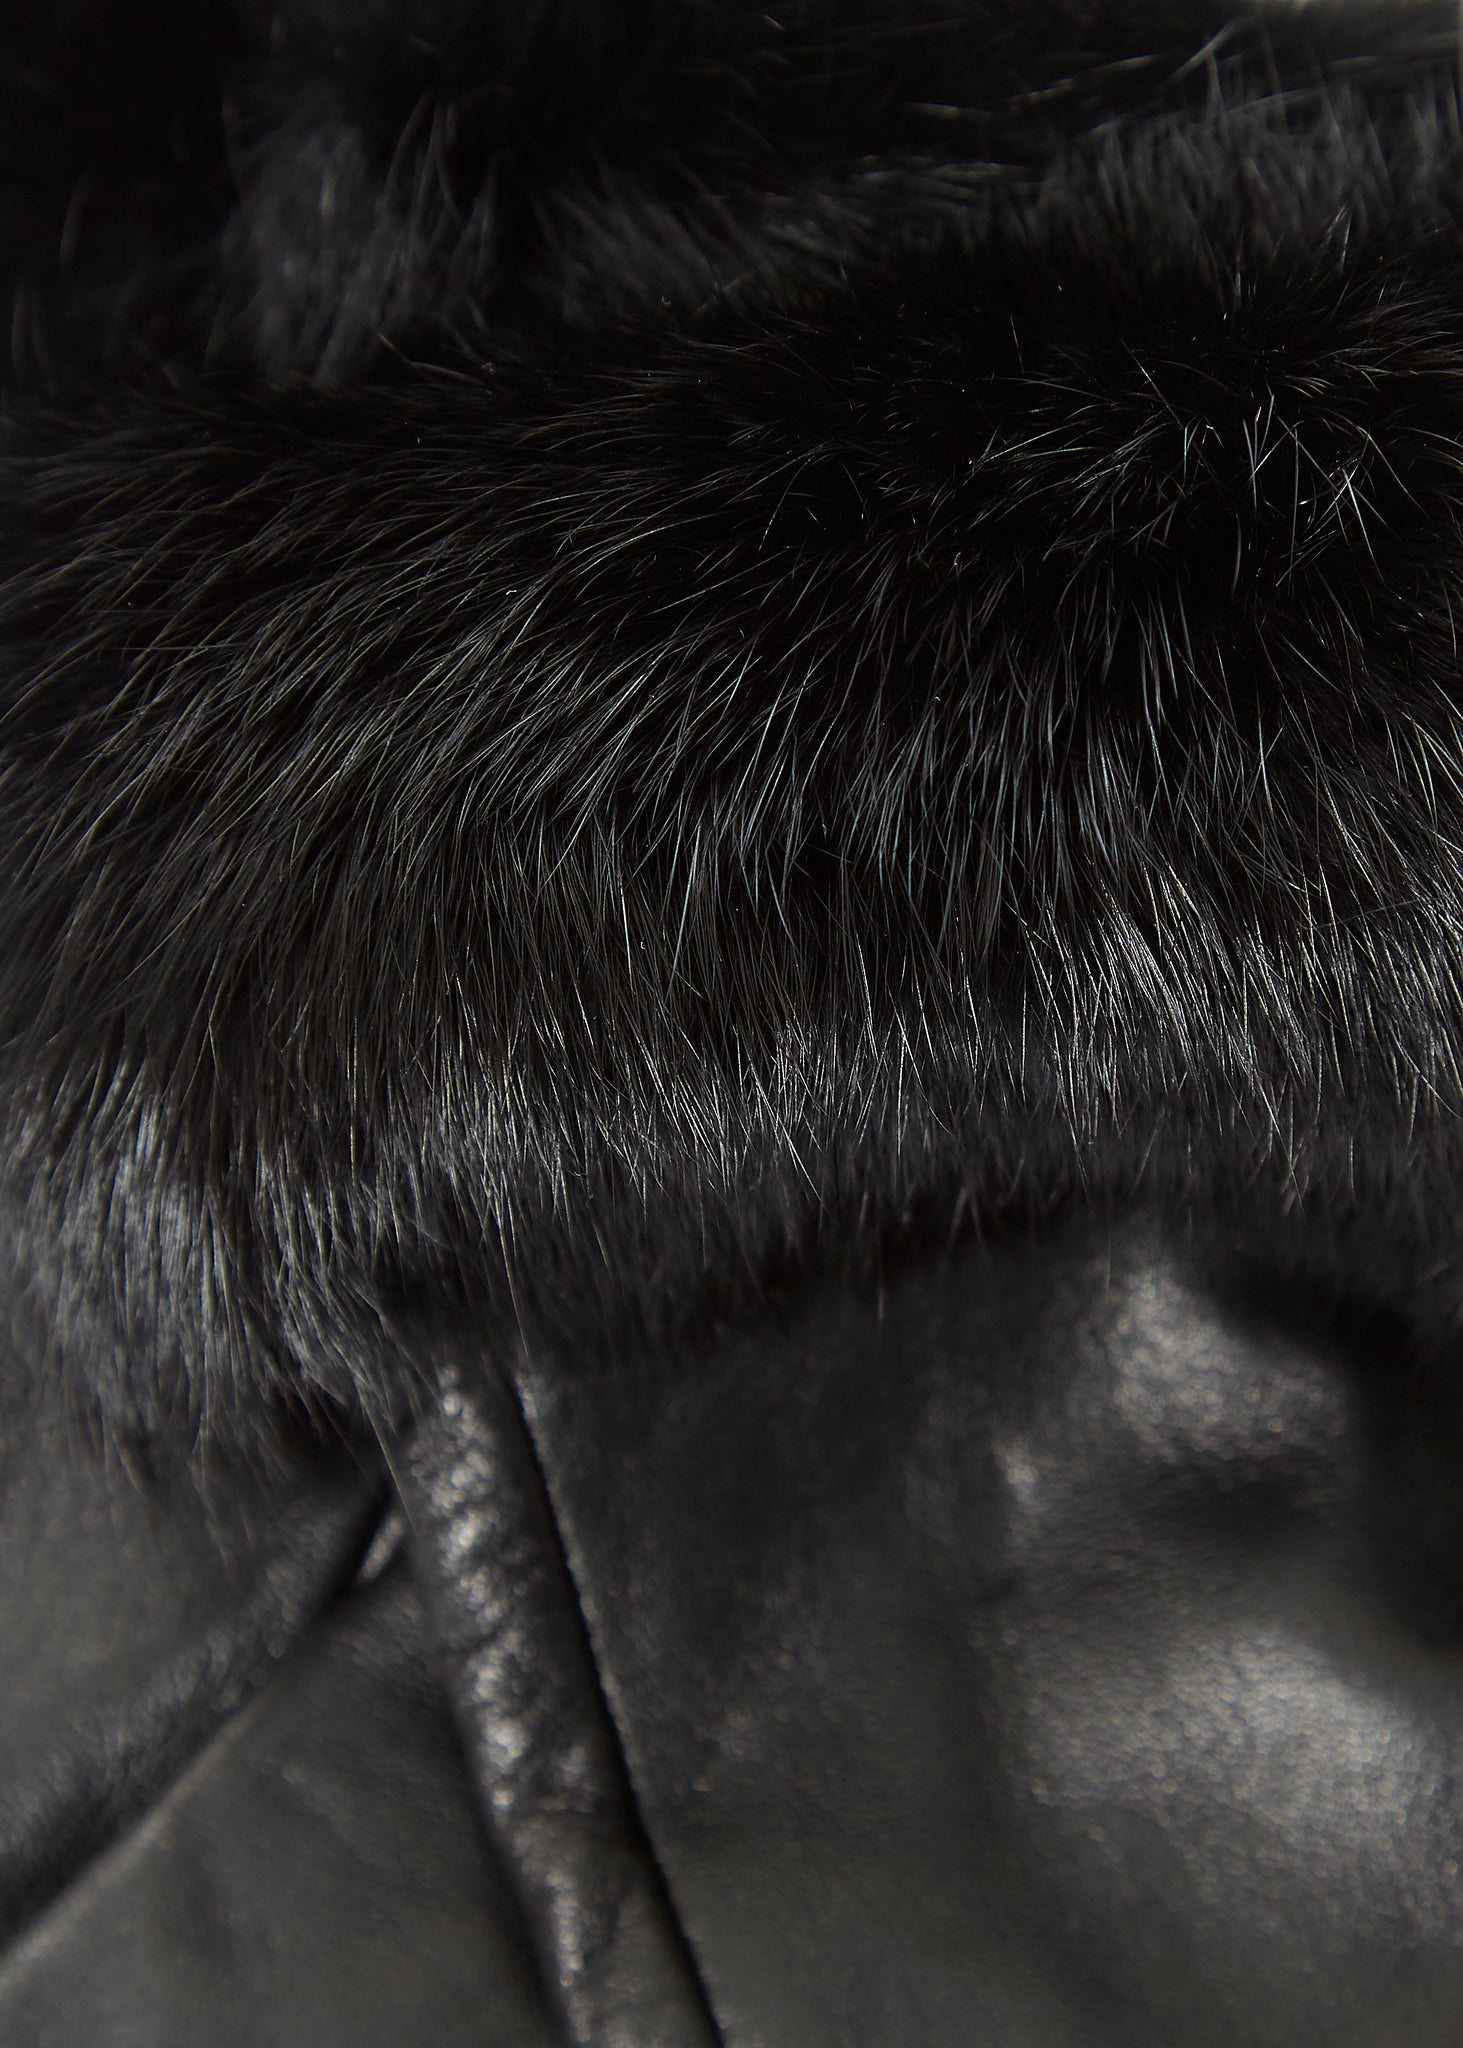 Black Leather Gloves With Rabbit Fur Trim - Jessimara